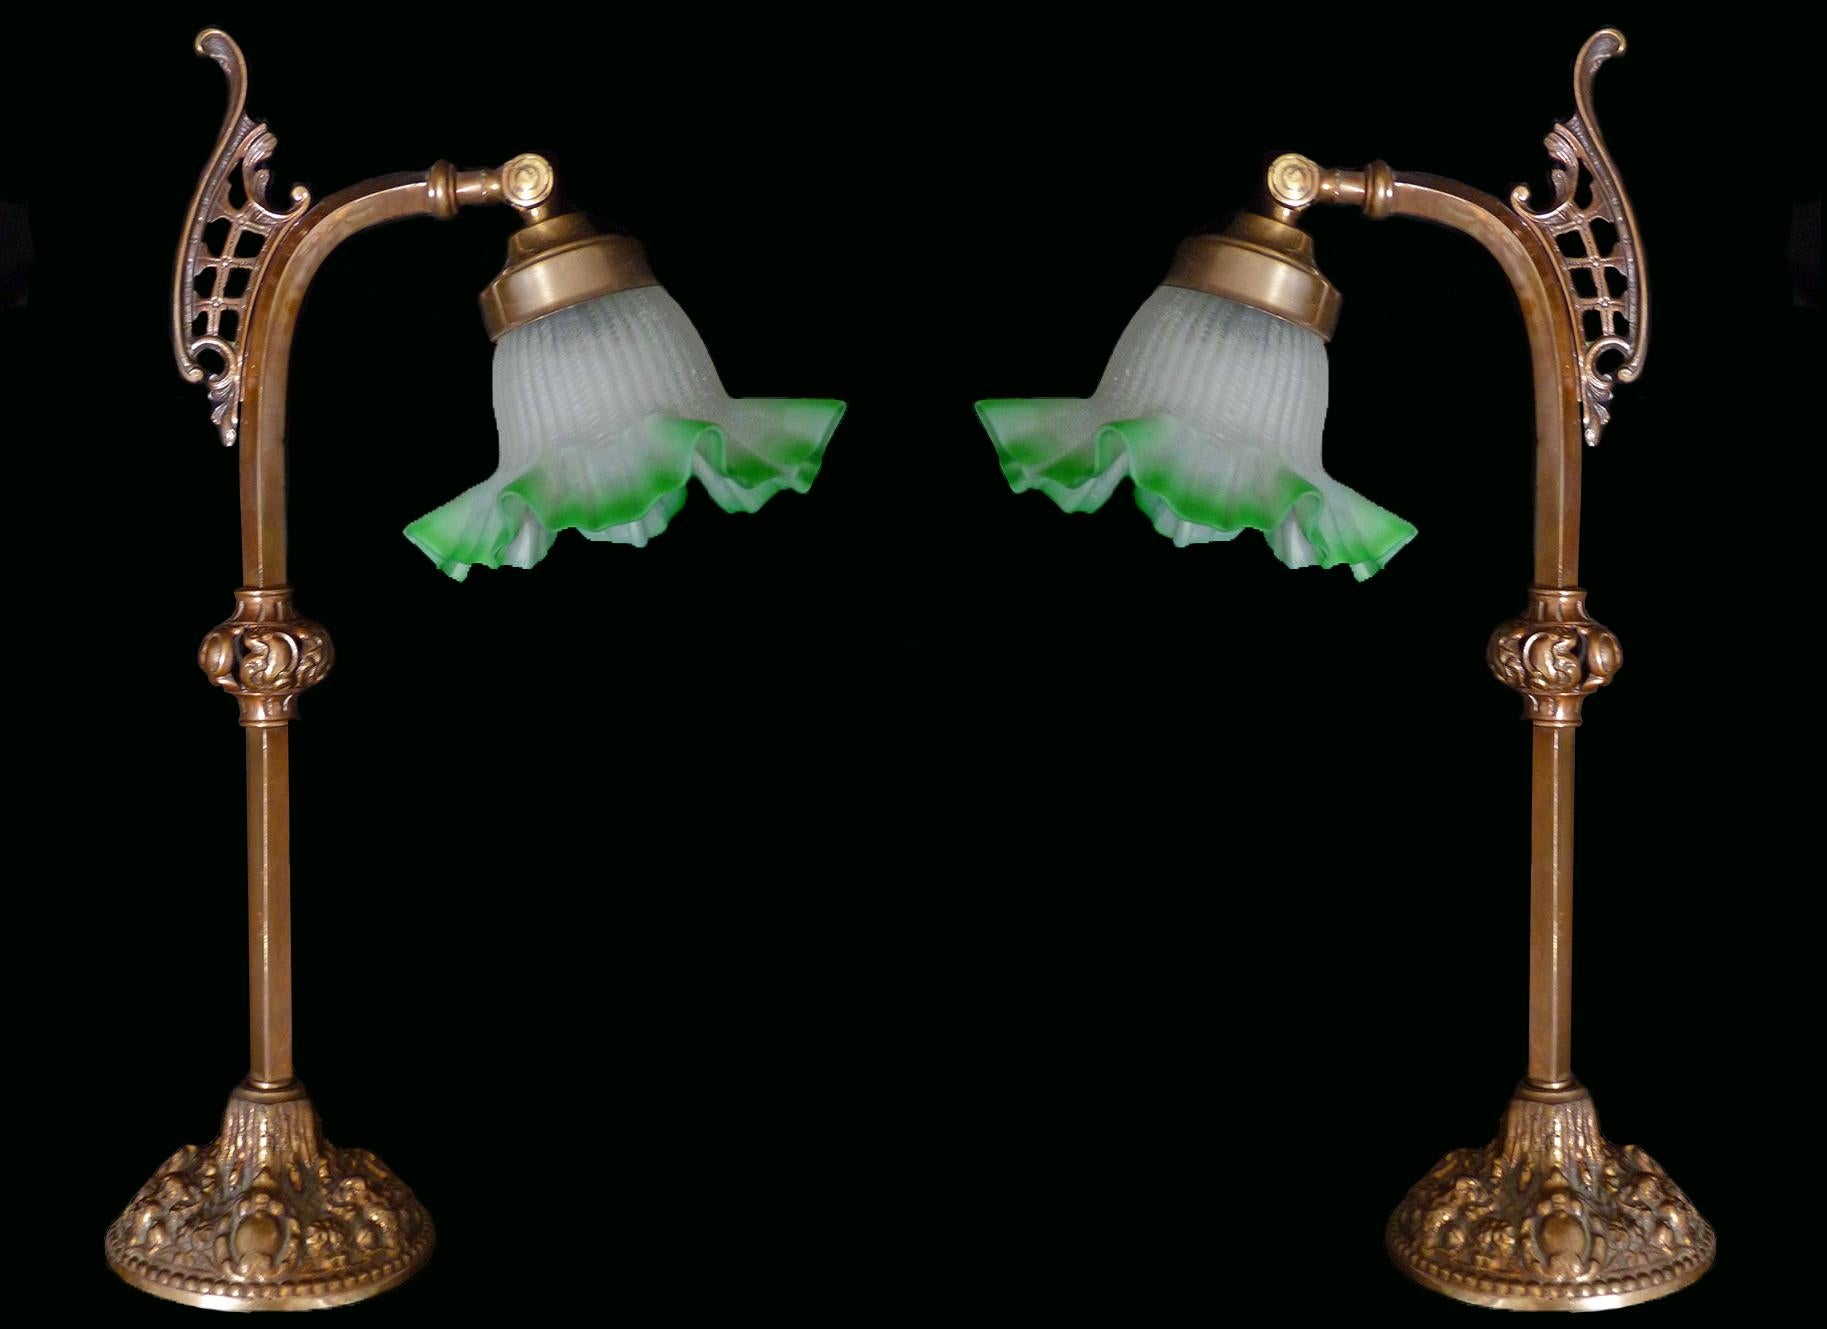 Art Deco Pair of Art Nouveau Ornate Bronze, Green Art Glass Flower Swing Arms Table Lamps